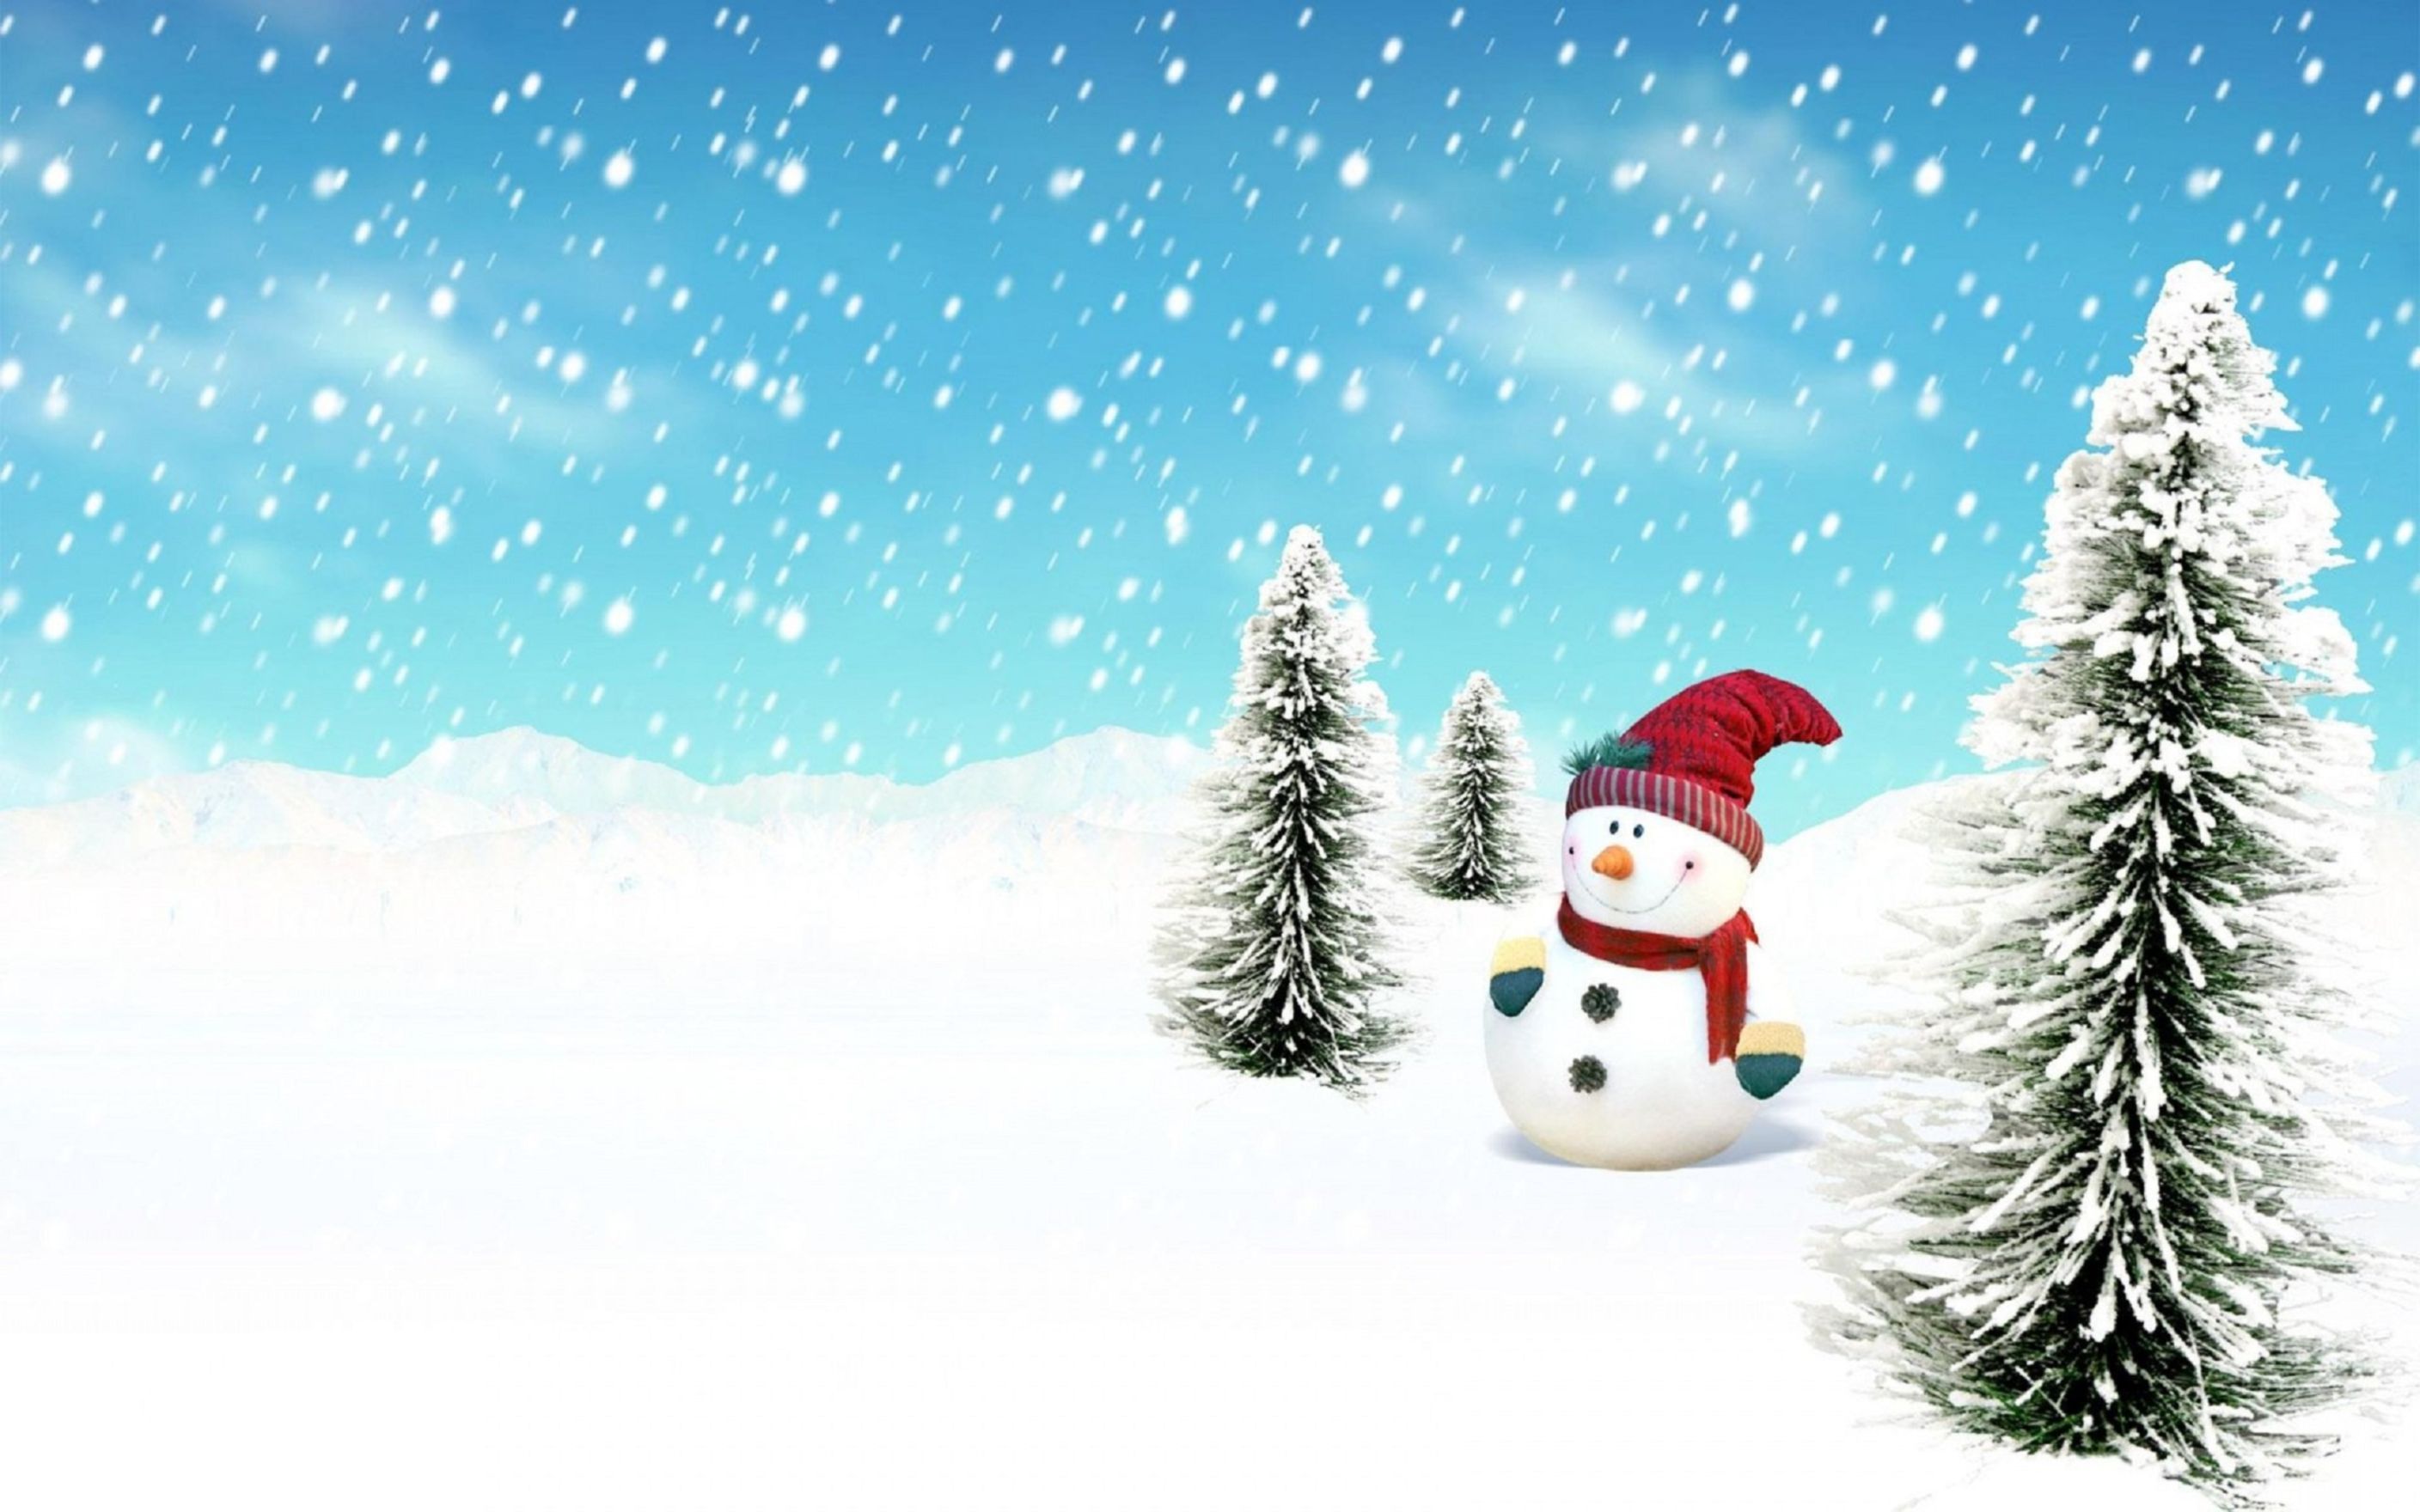 Christmas Snowman Image Wallpaper: Desktop HD Wallpaper Free Image, Picture, Photo on DailyHDWallpaper.com